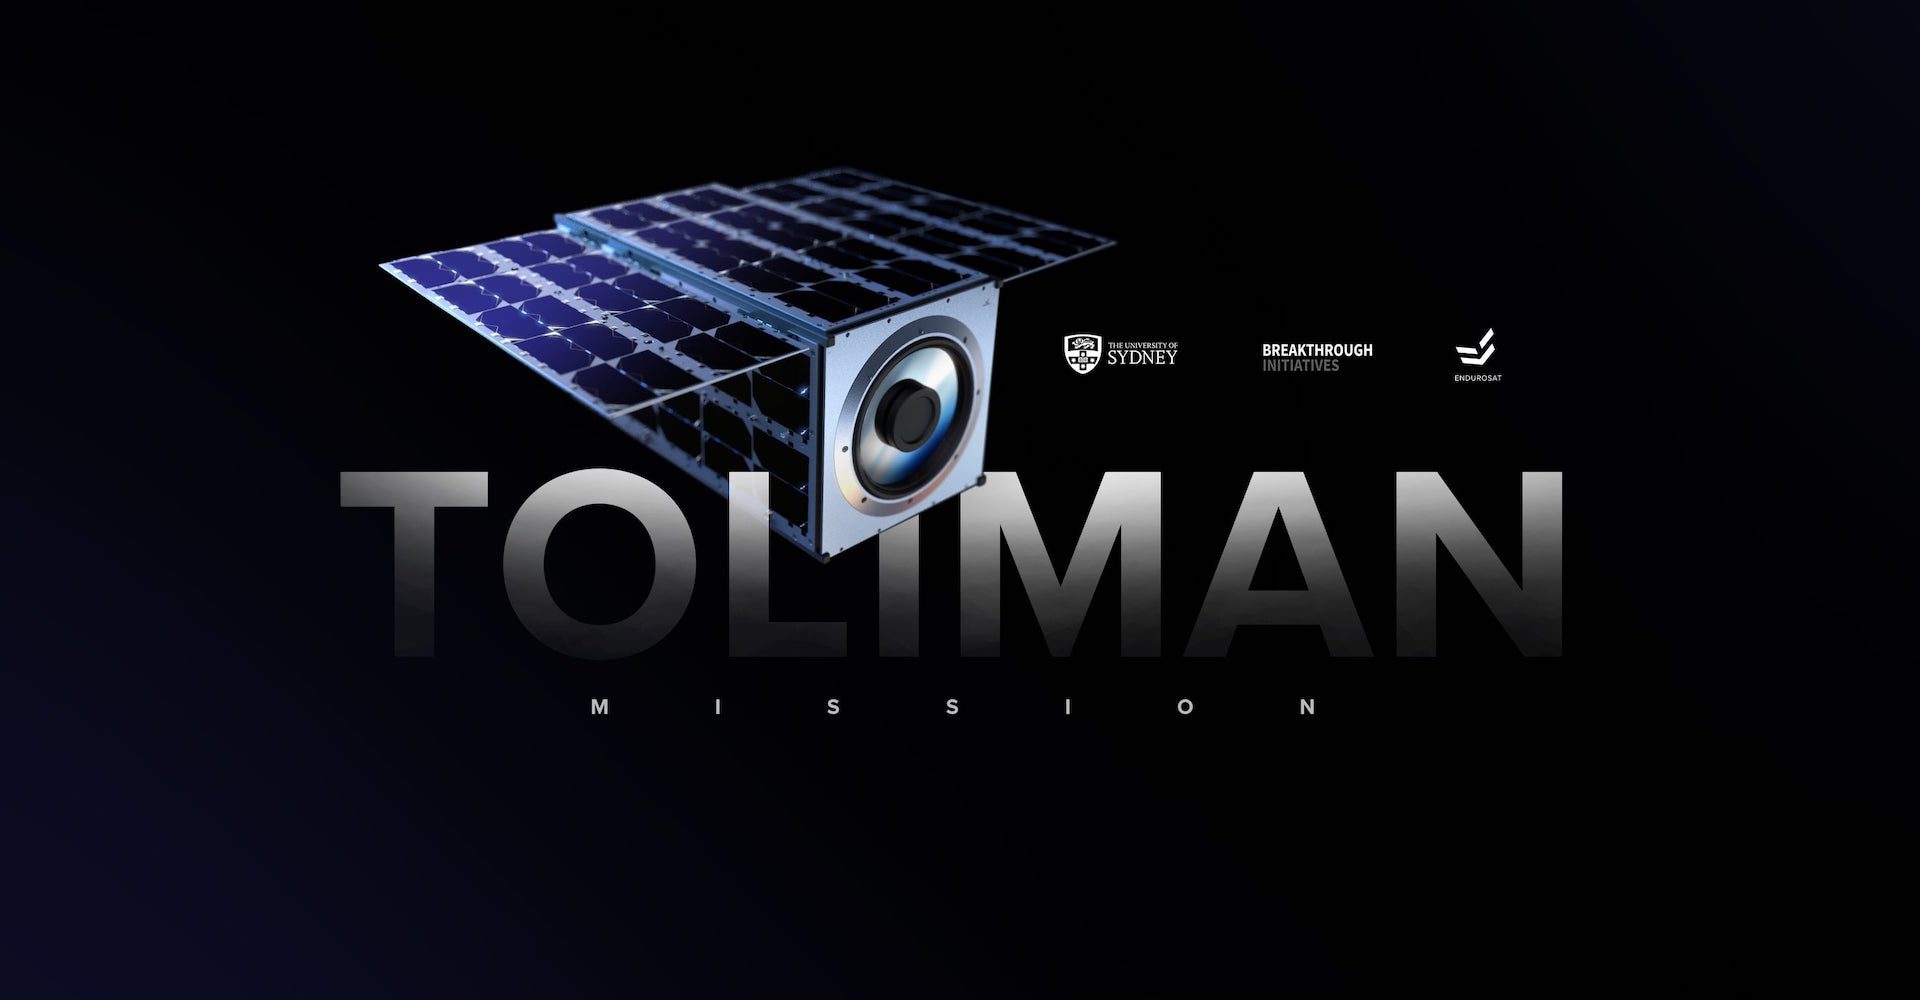 University of Sydney Breakthrough Initiatives TOLIMAN mission EnduroSat 16U MicroSat 1